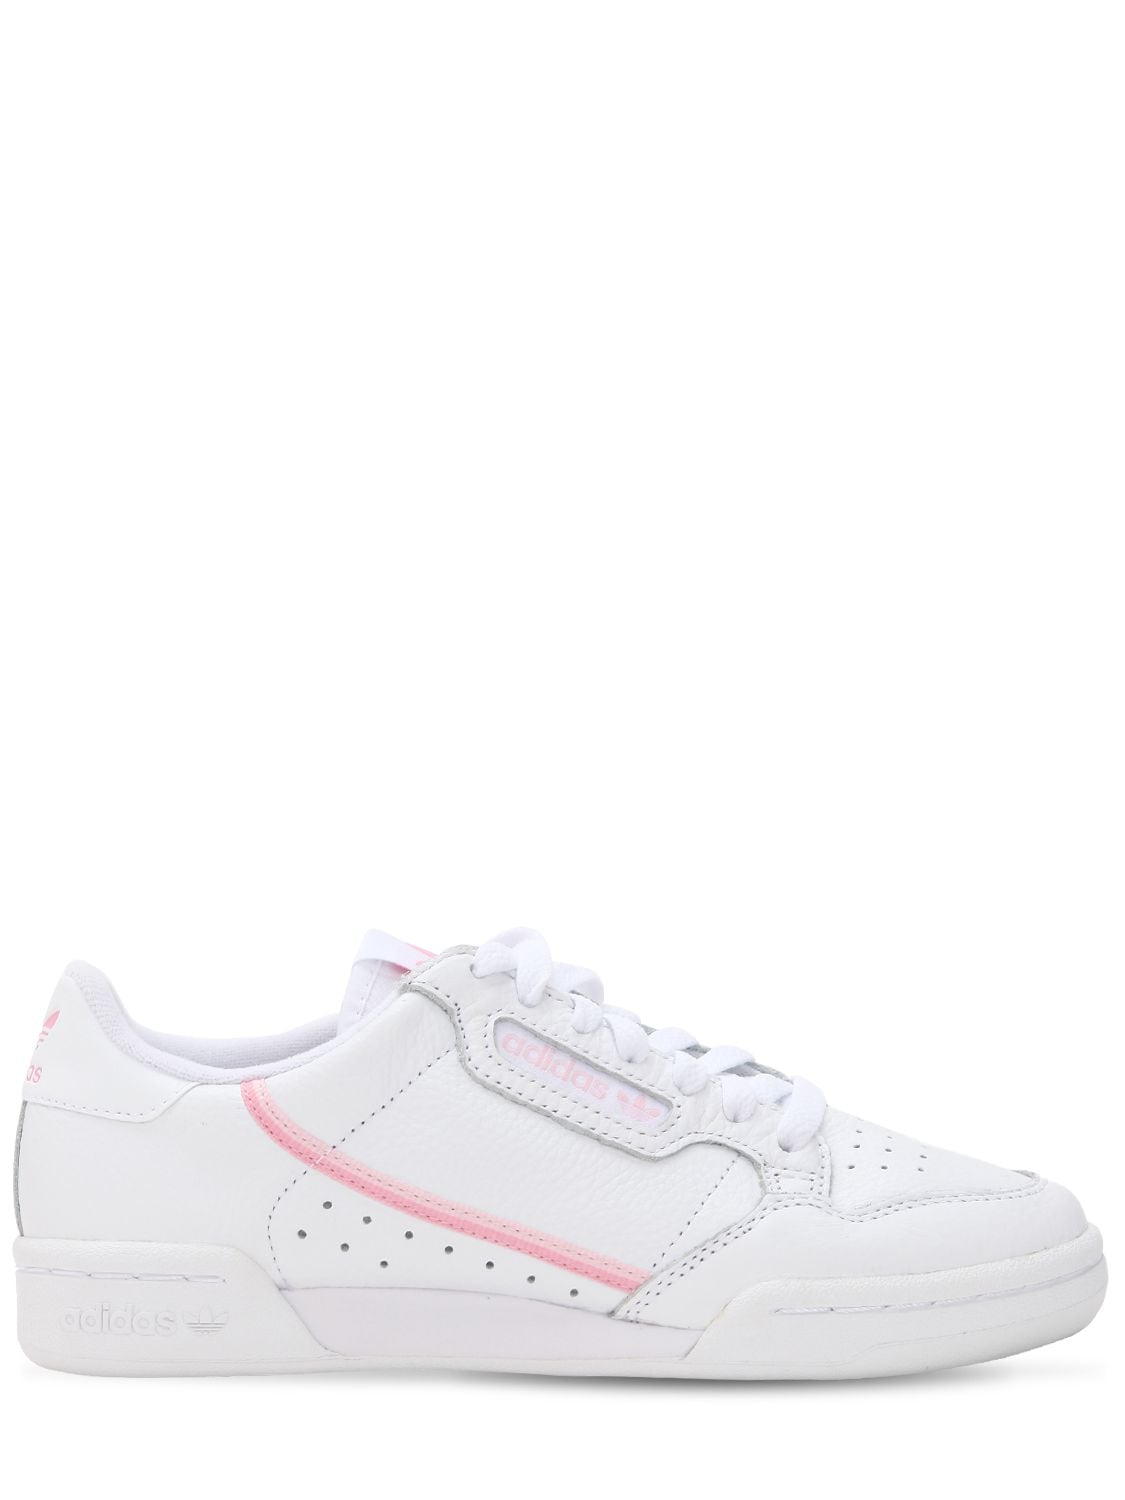 adidas originals continental 80 white and pink